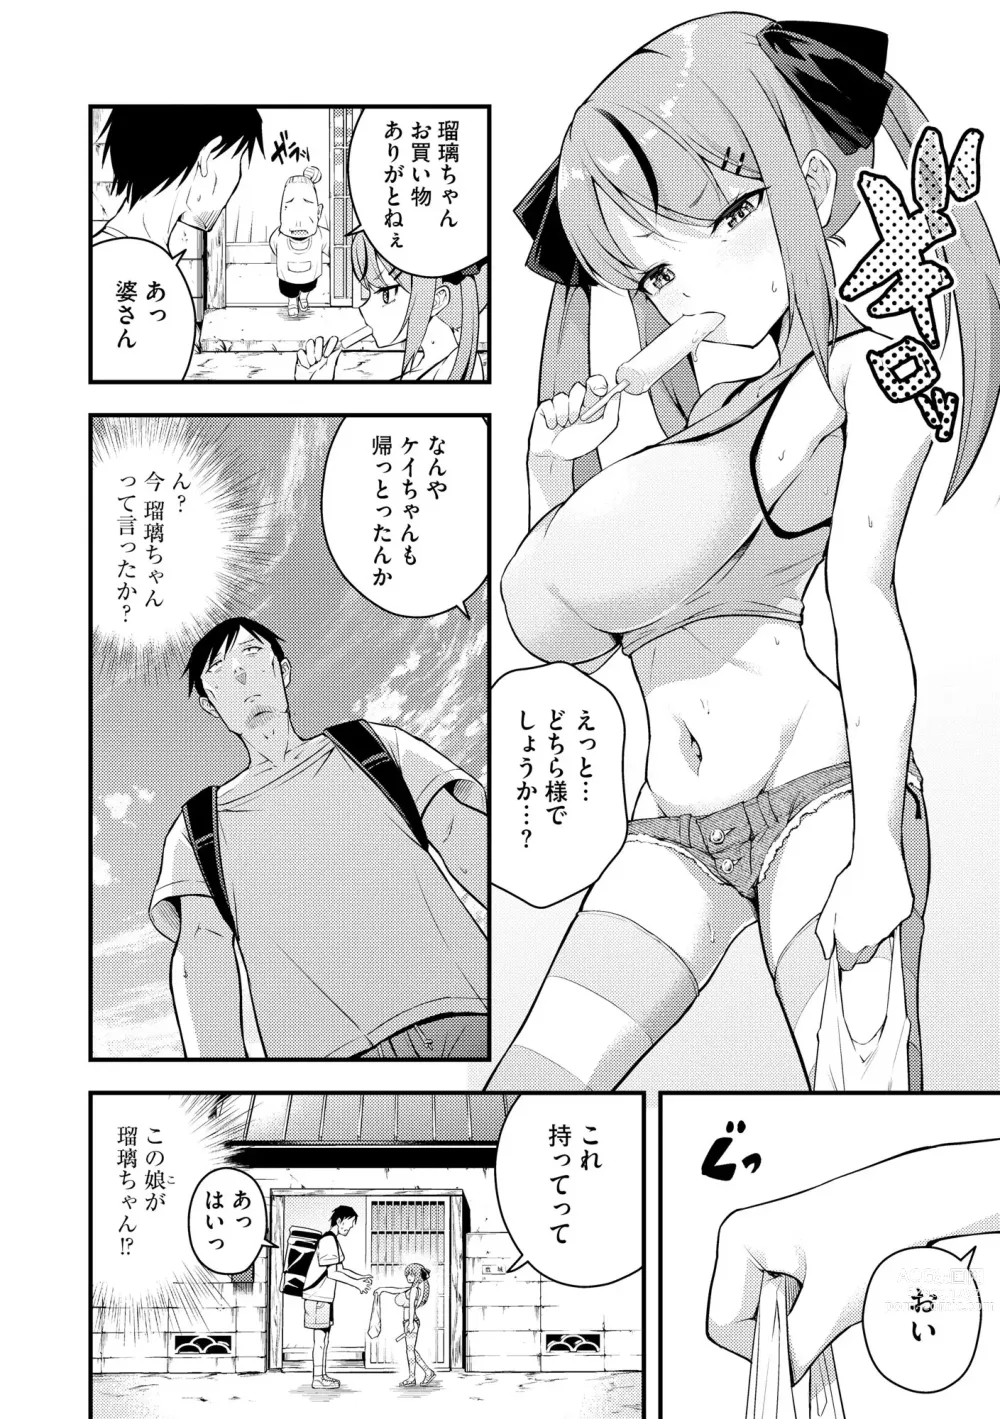 Page 8 of manga Cyberia Plus Vol. 16